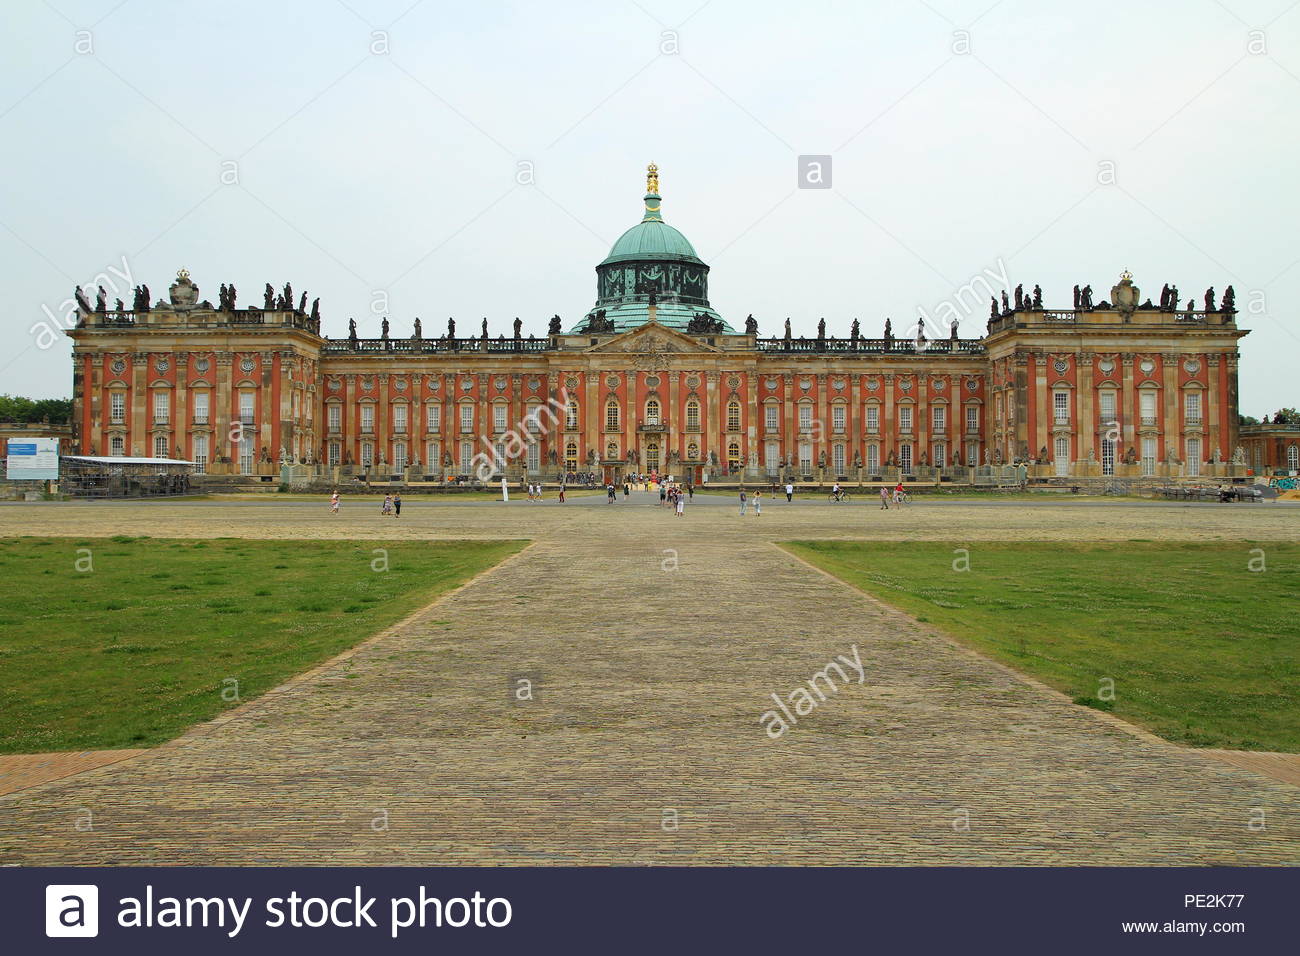 Neuer Garten Potsdam Inspirierend King Prussia Stock S & King Prussia Stock